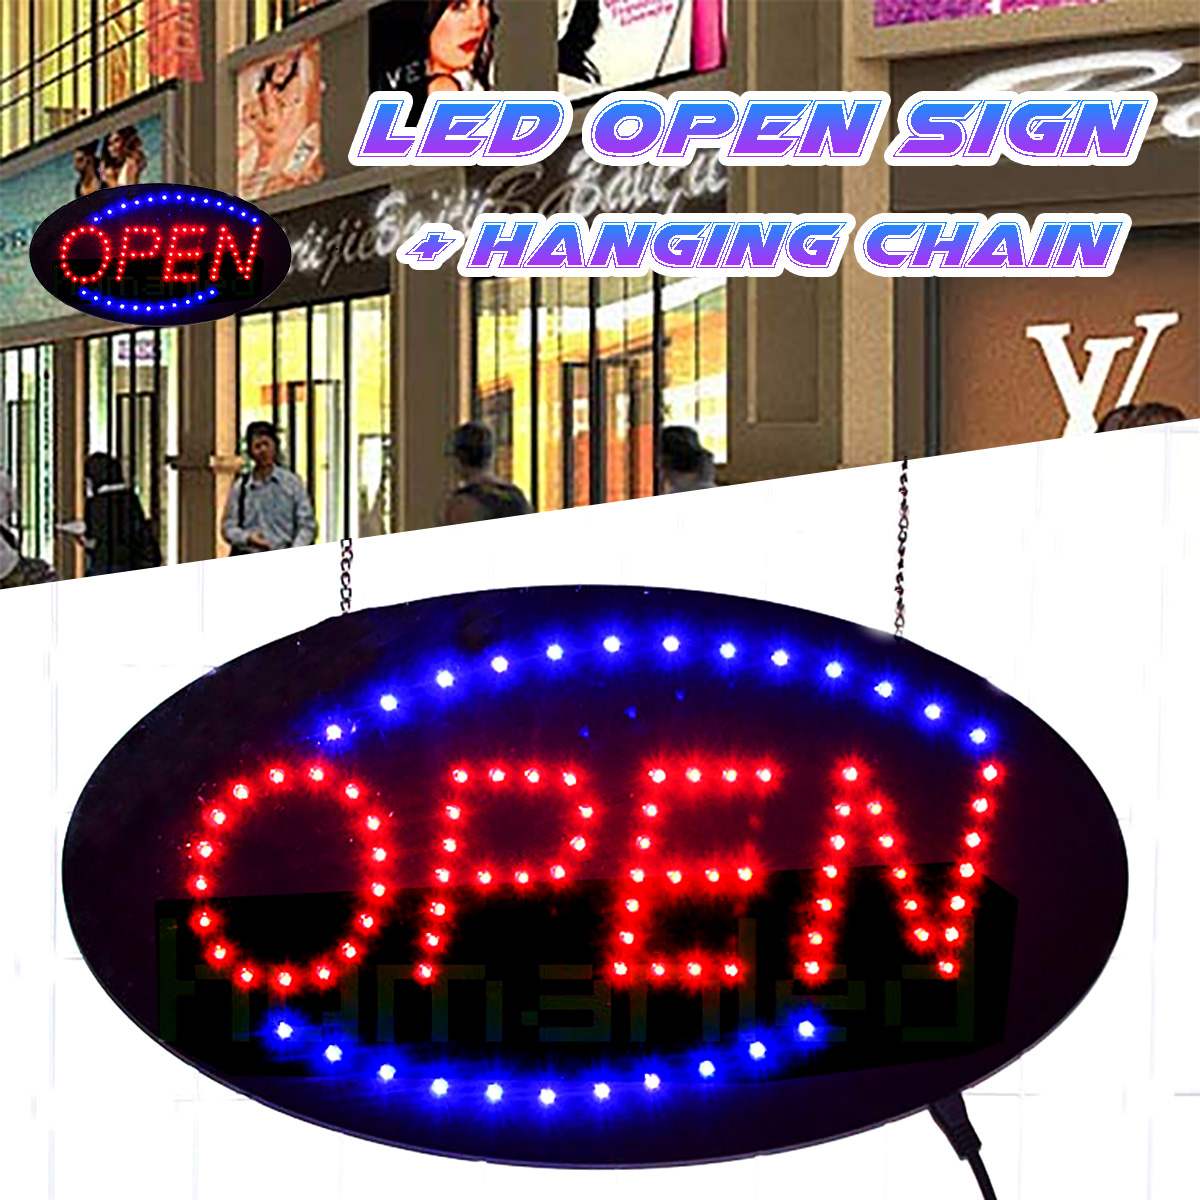 Led Winkel Open Teken Business Shop Bar Neon Borden Heldere Reclame Licht Boord Animated Motion Winkel Billboard Etalage